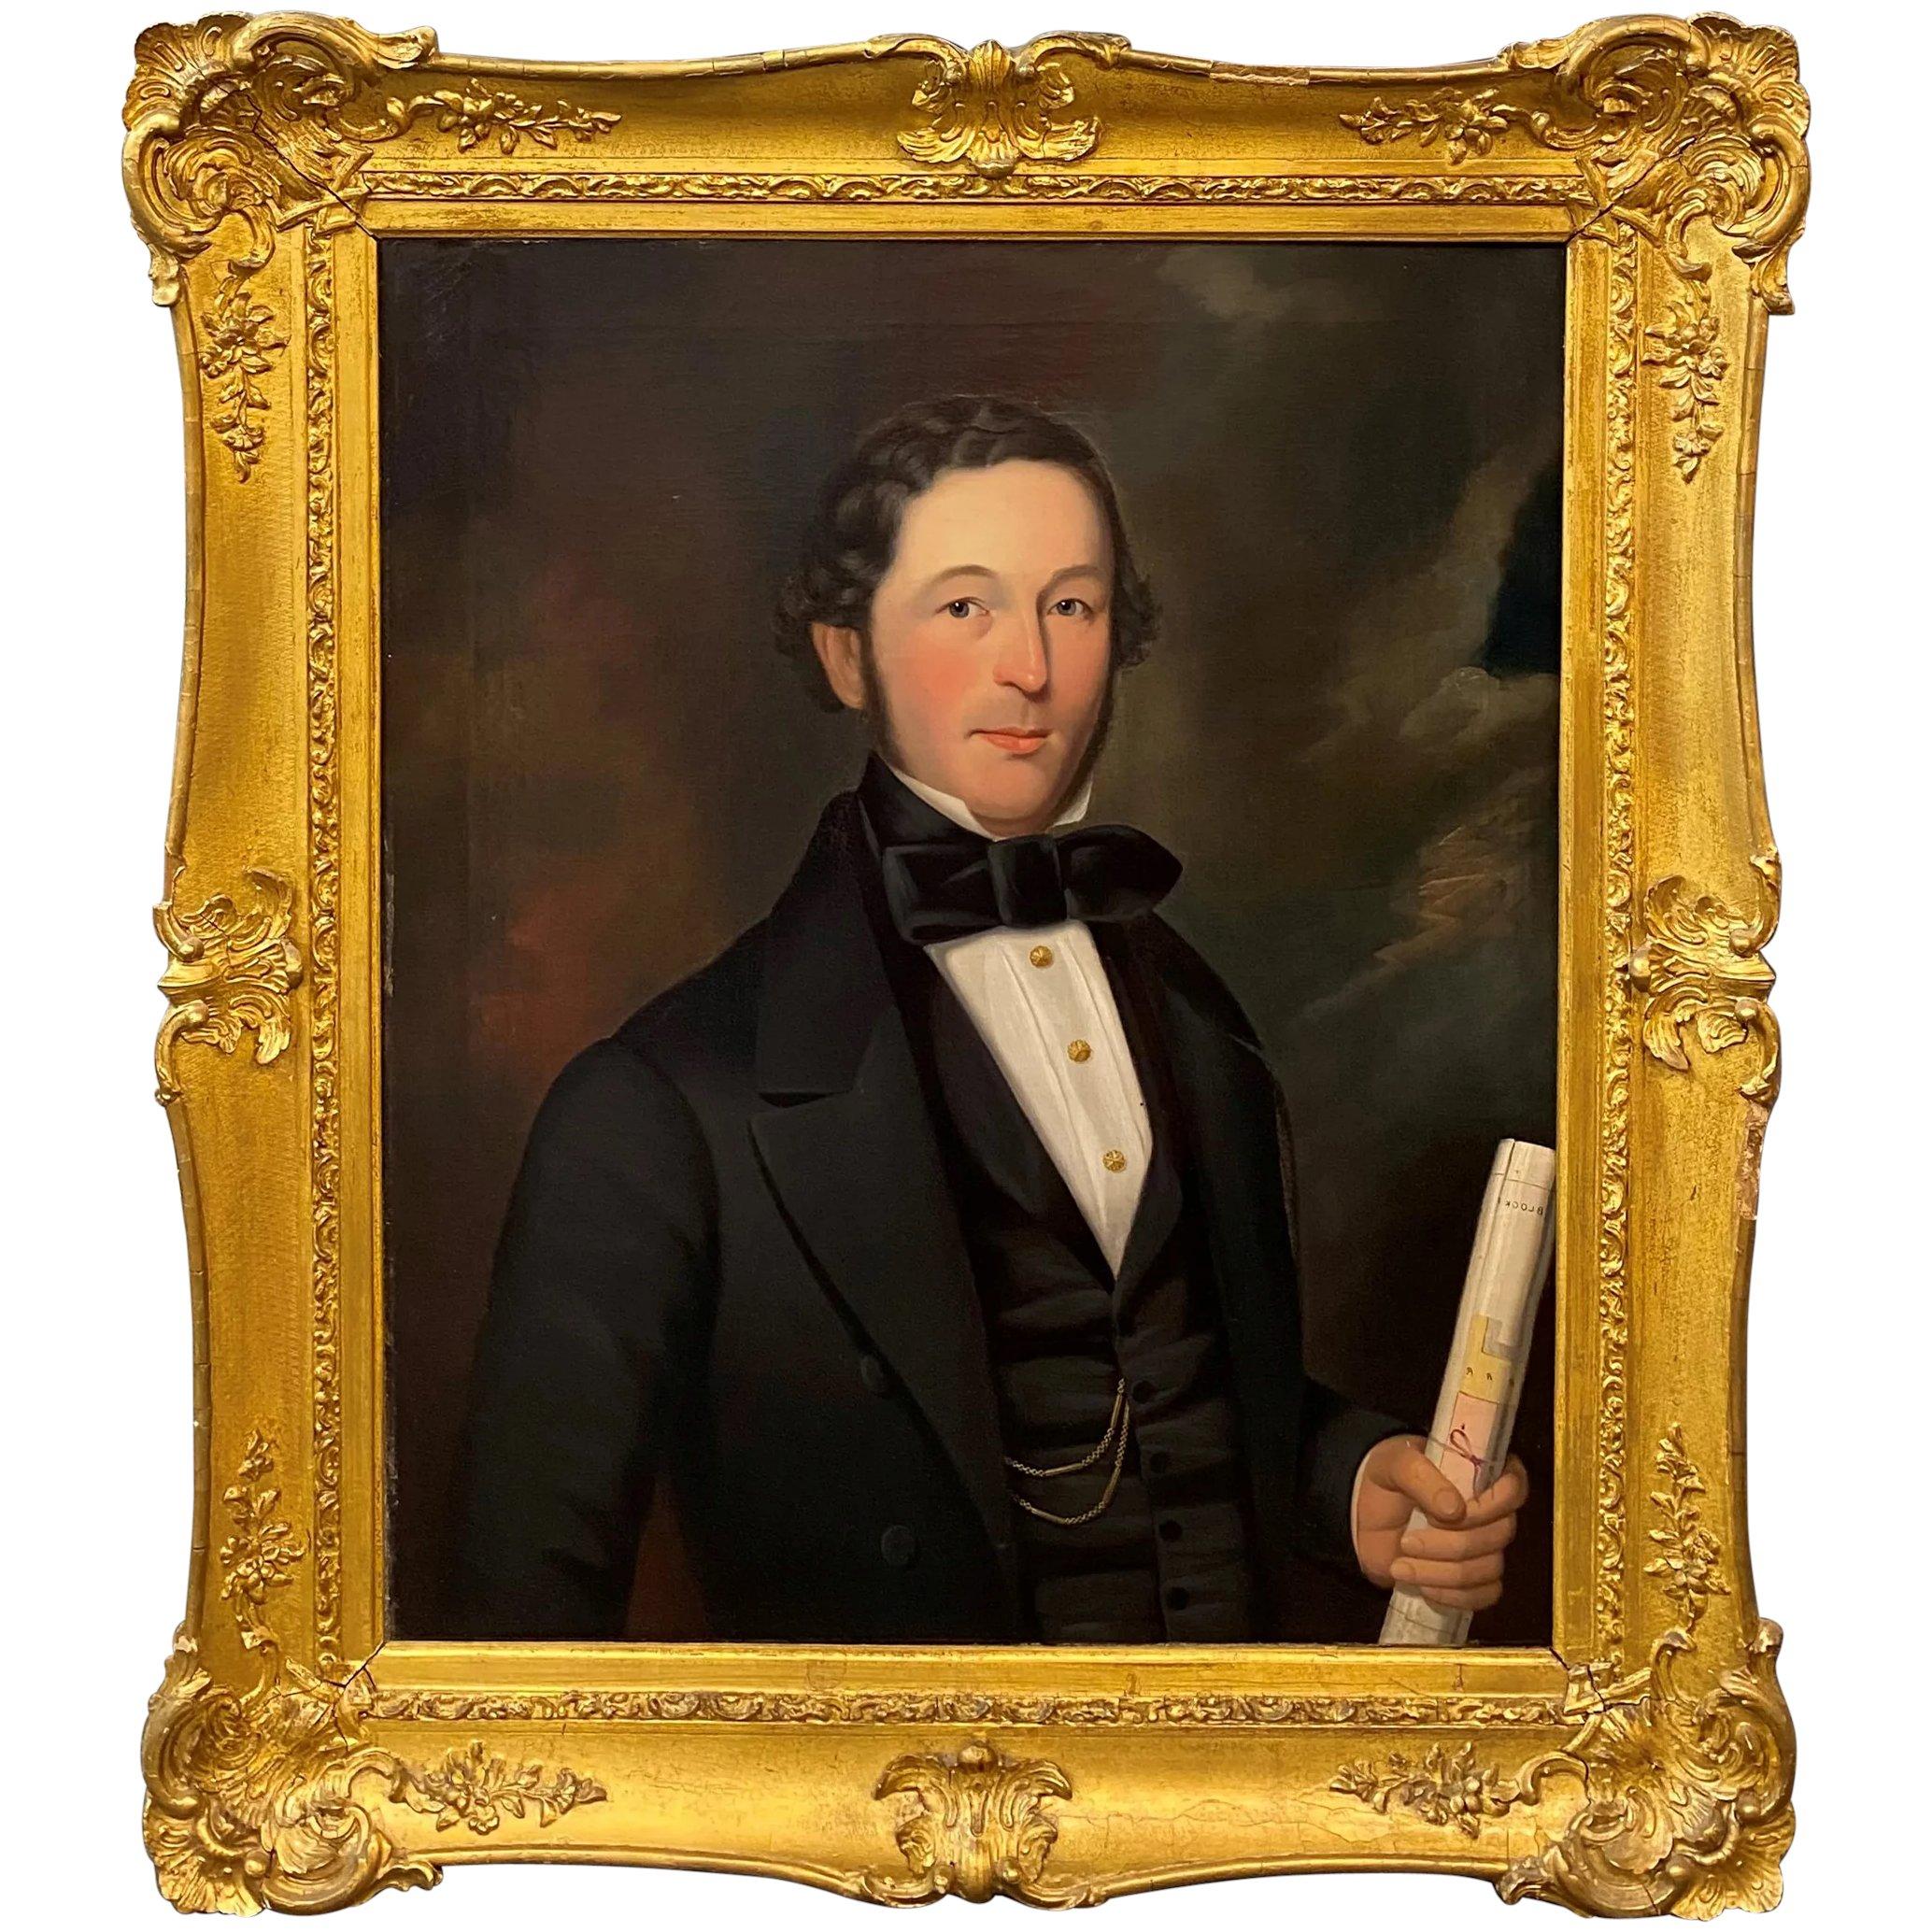 George Hedley Portrait Painting - Portrait of a Gentleman or Architect